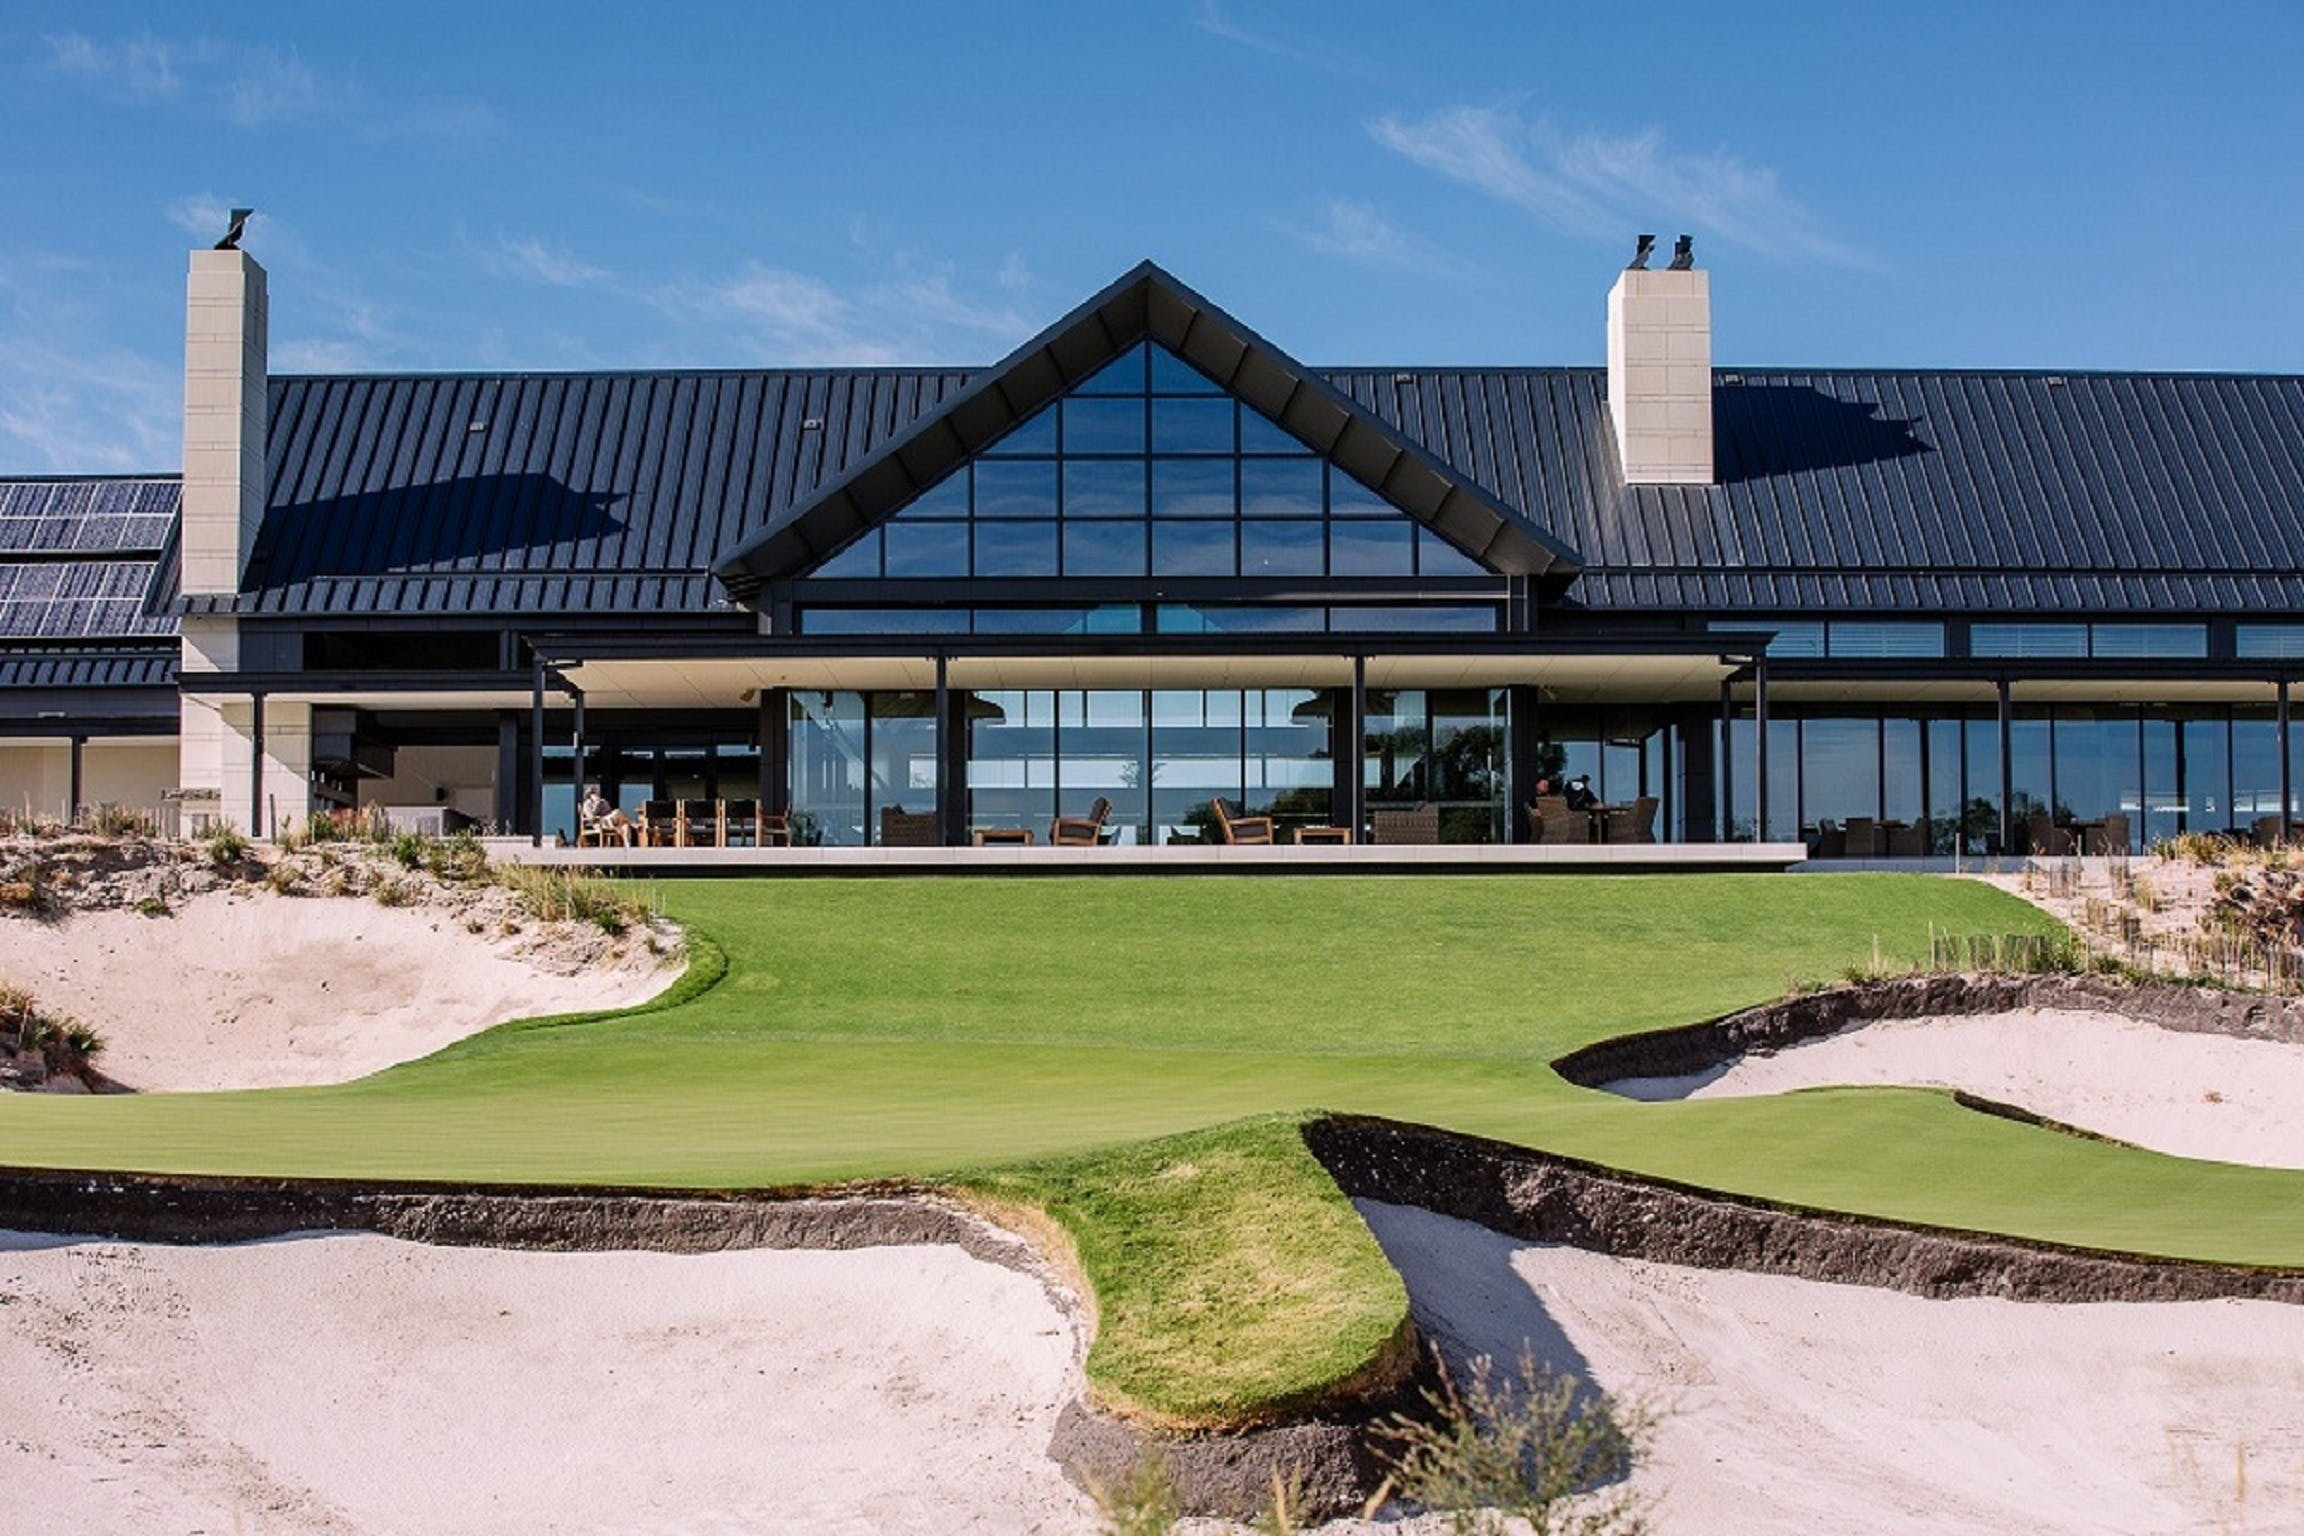 Peninsula Kingswood Country Golf Club - Accommodation Nelson Bay